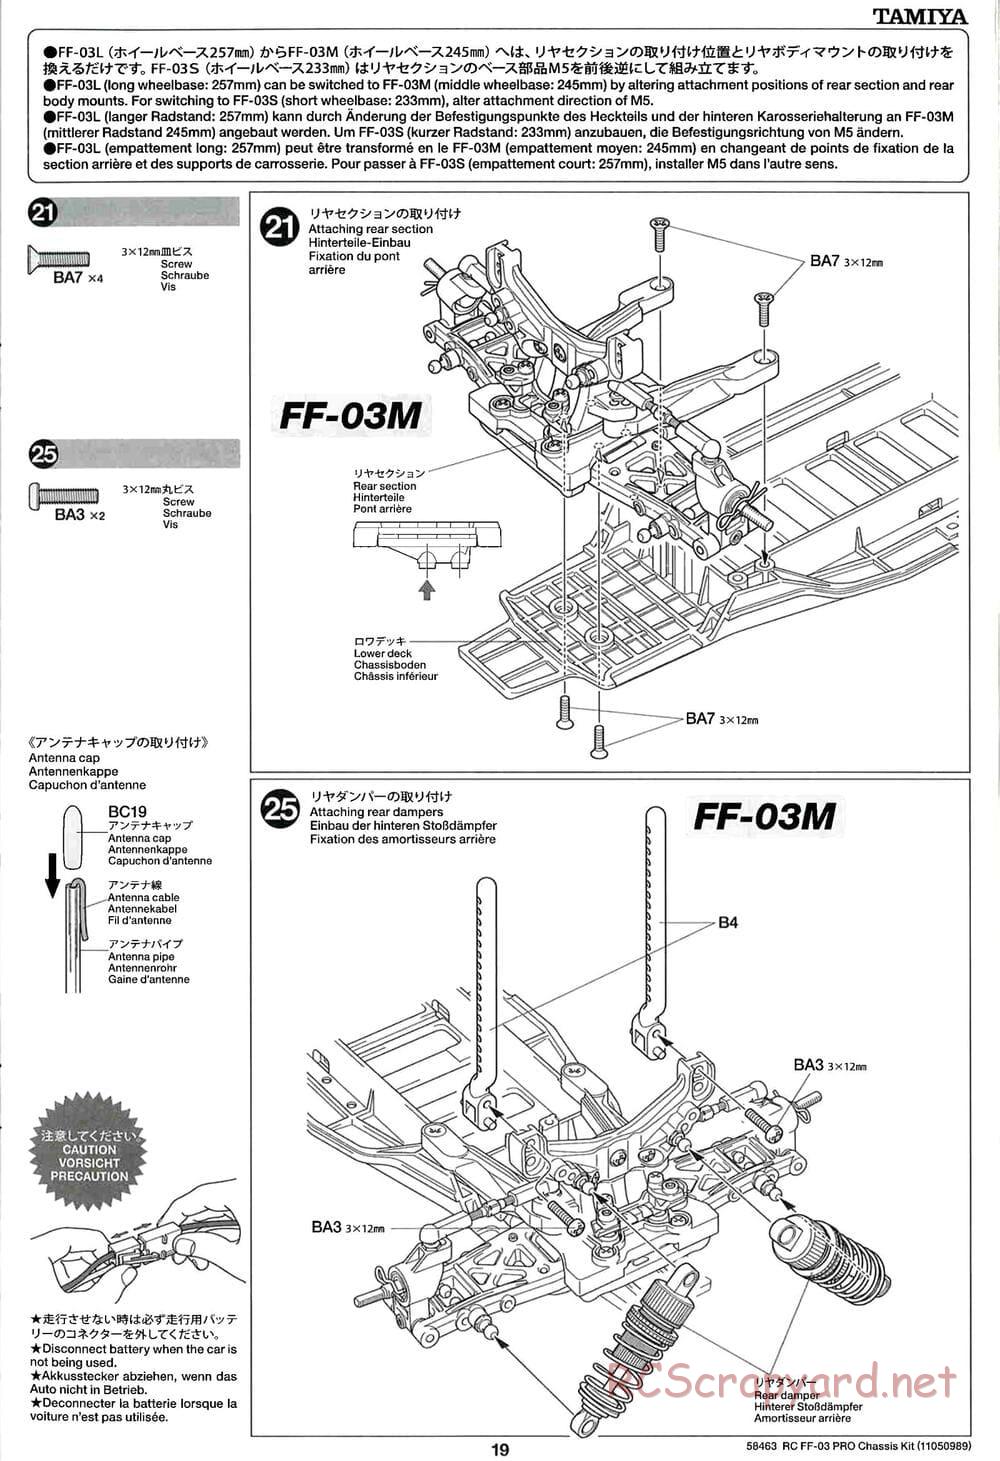 Tamiya - FF-03 Pro Chassis - Manual - Page 19